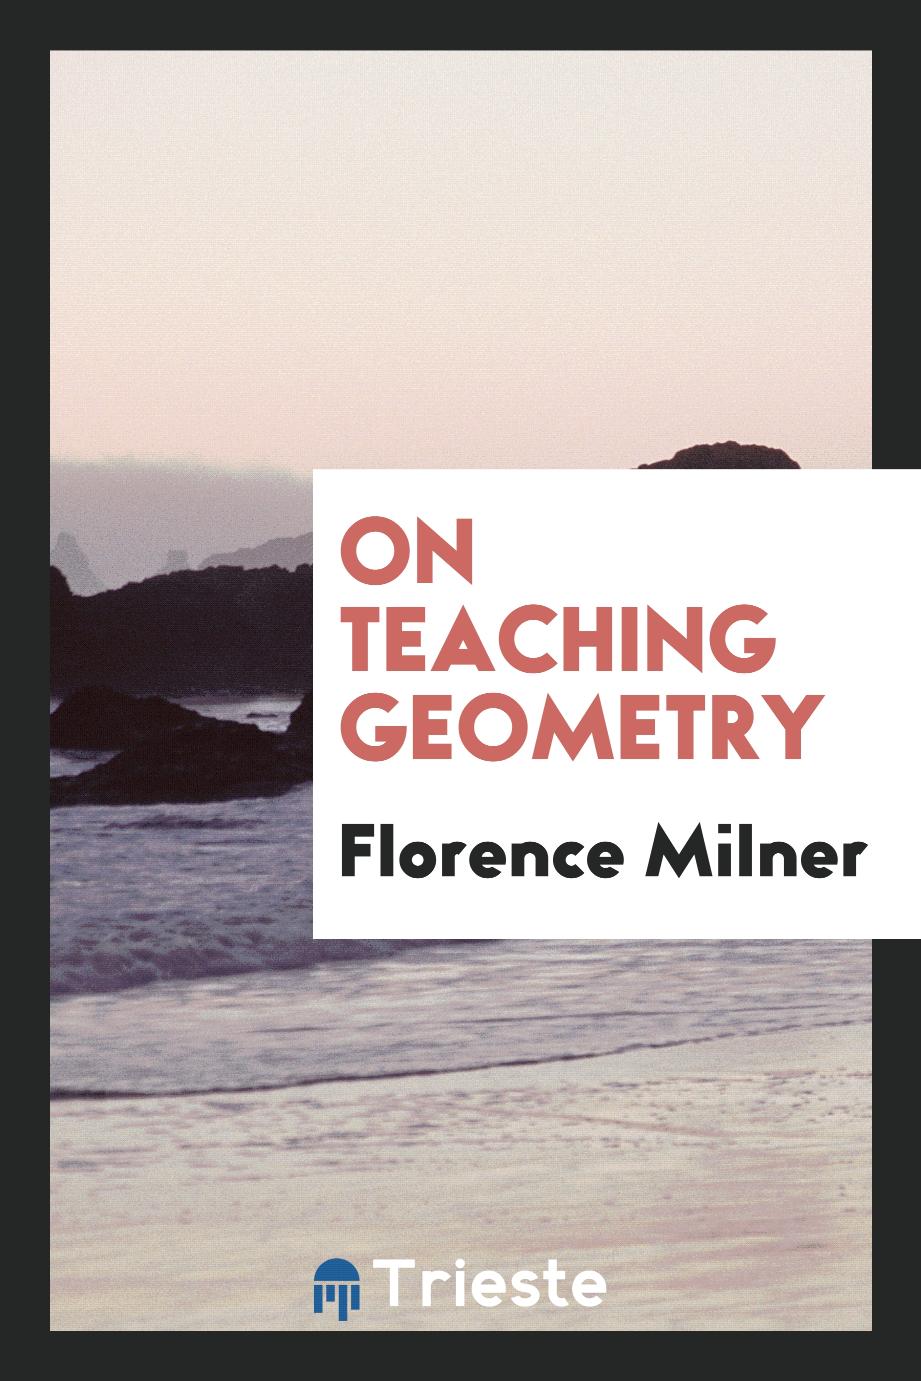 On teaching geometry